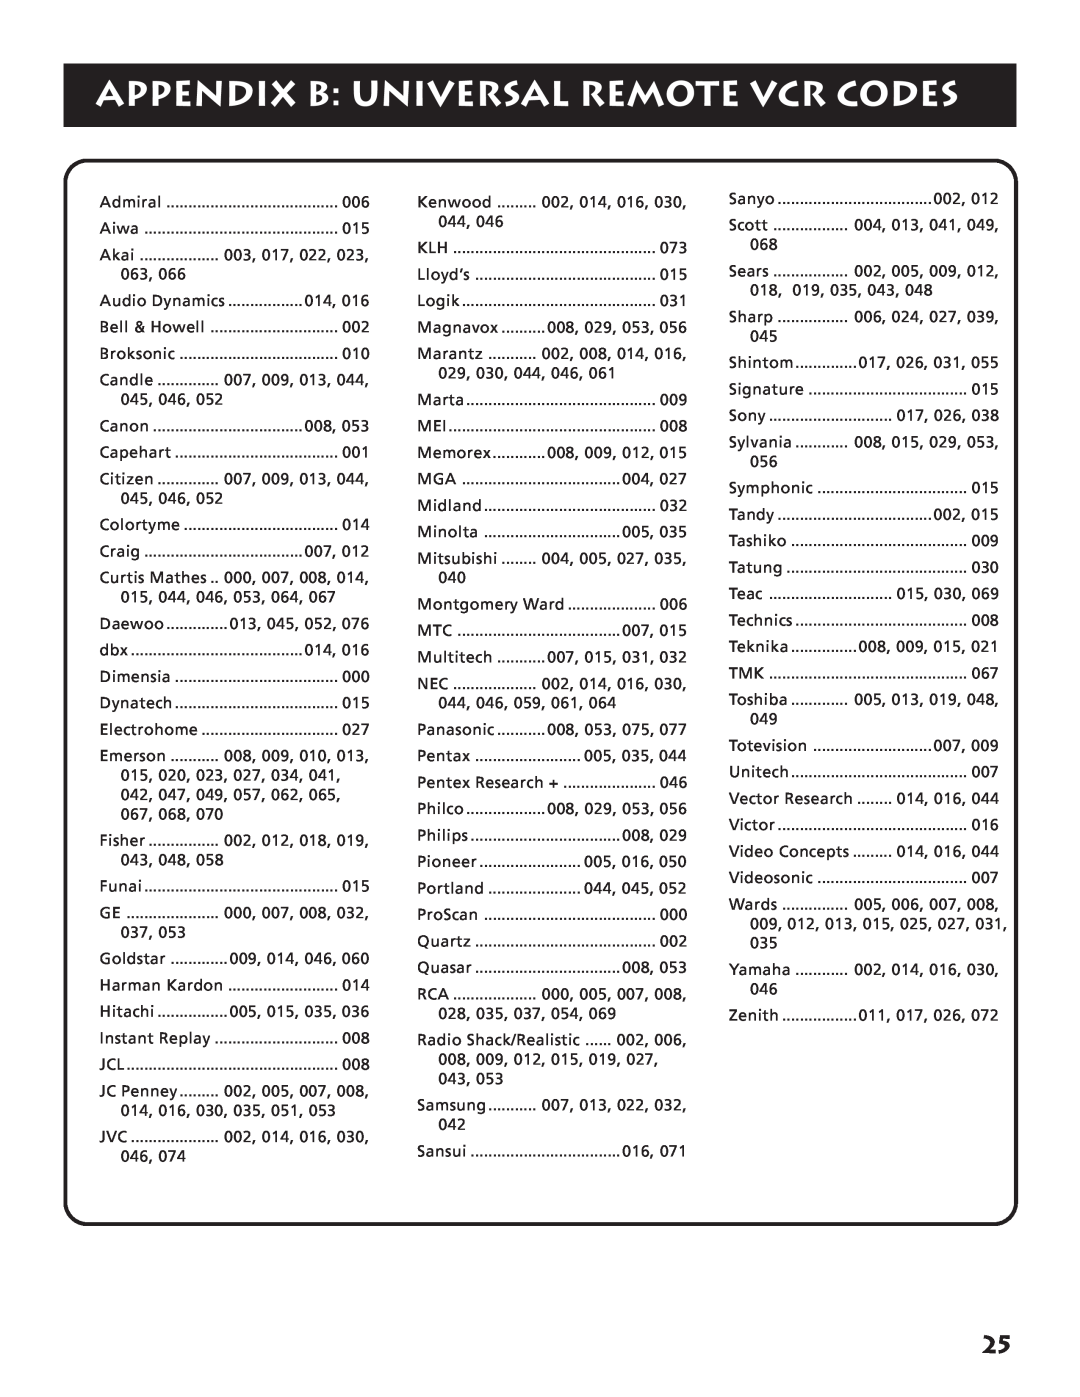 RCA RP-9380 manual Appendix B Universal Remote Vcr Codes 